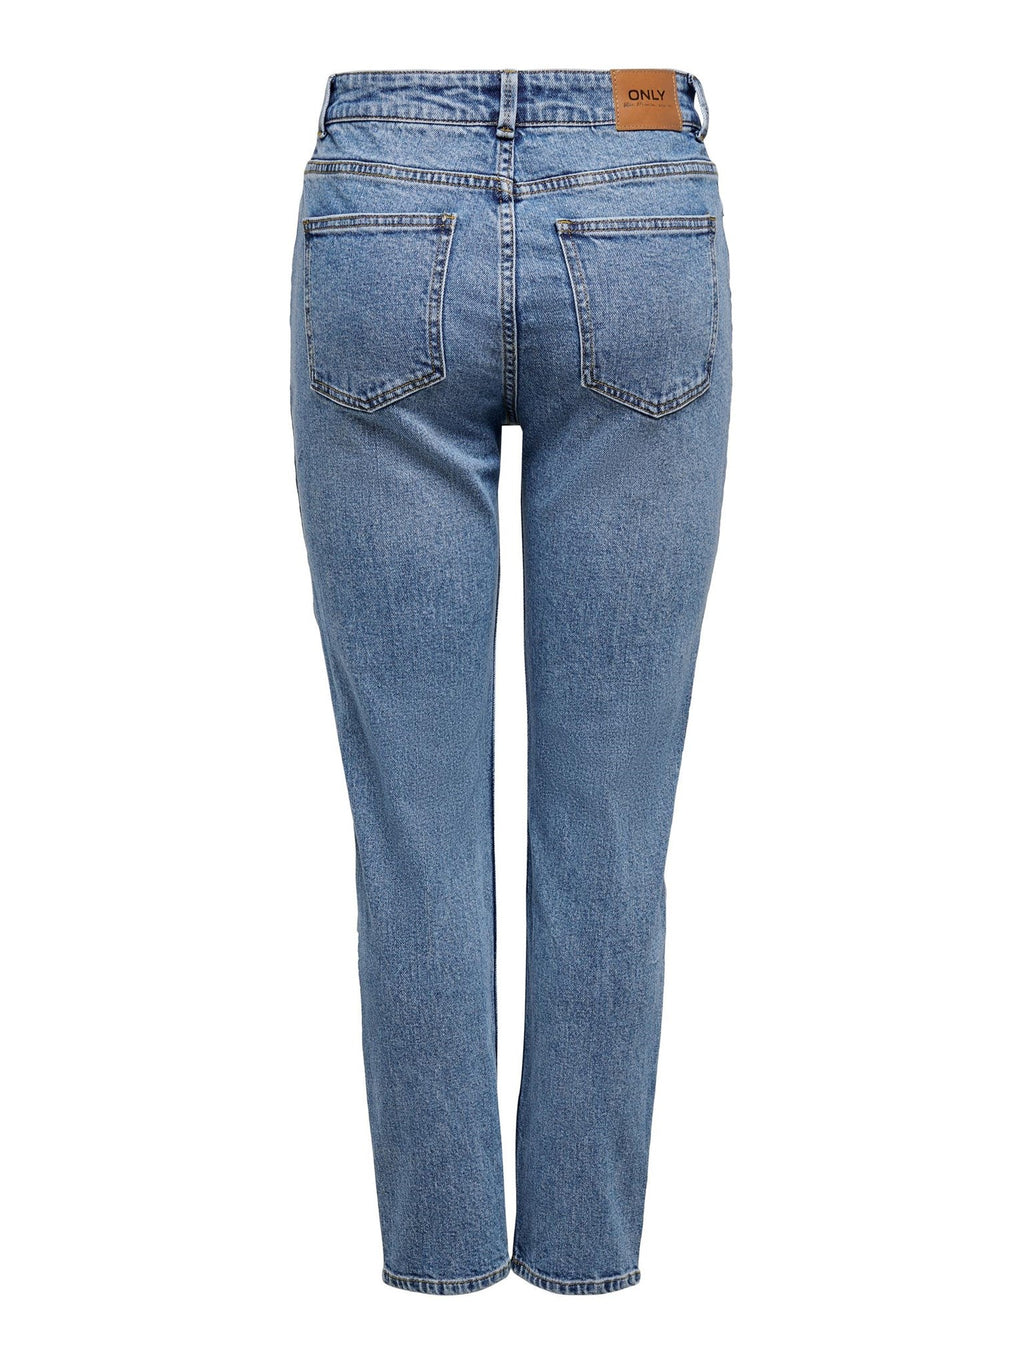 Emily High Waist Jeans - Medium Blue